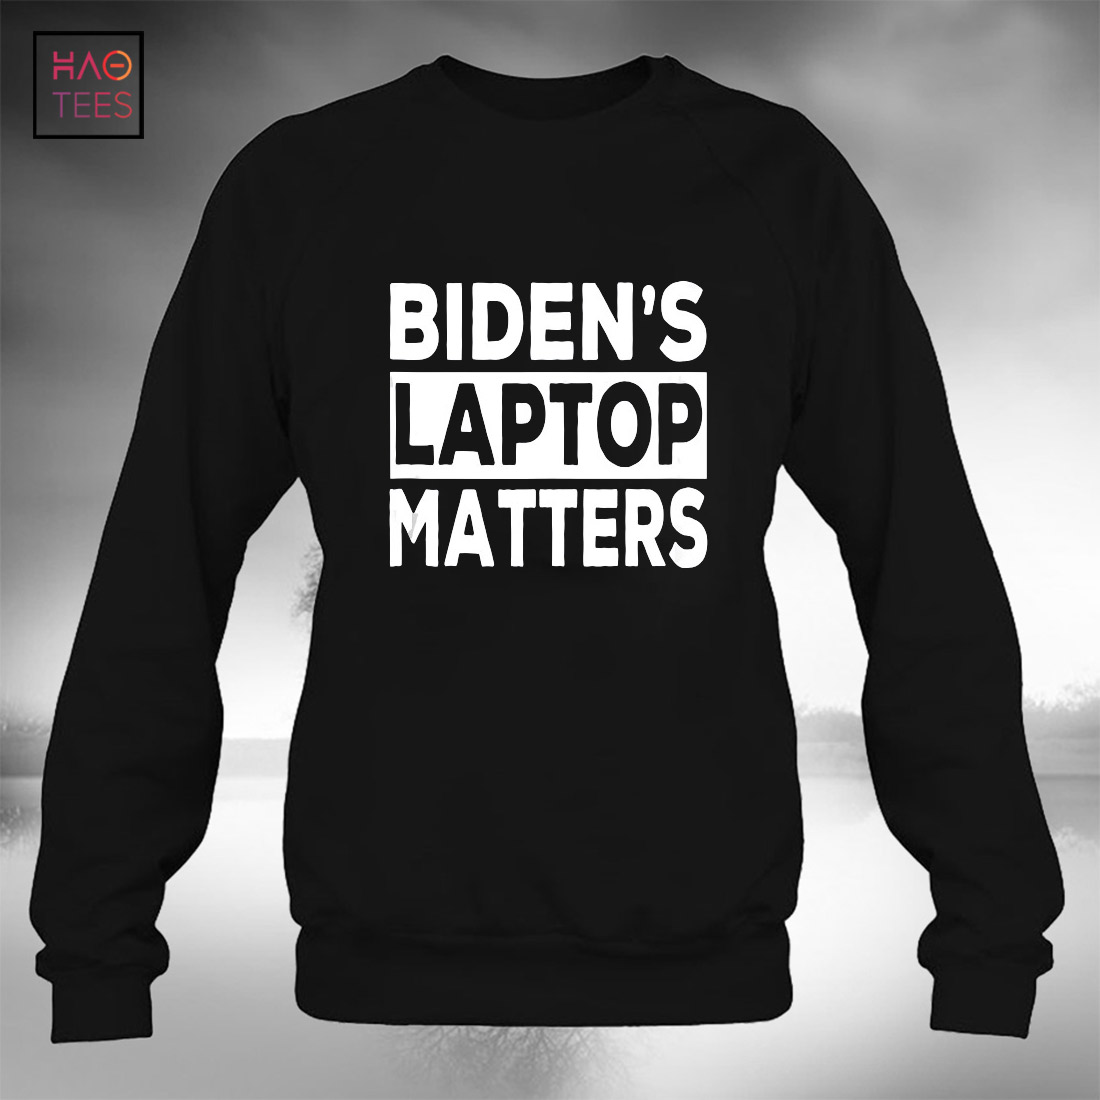 Biden’s Laptop Matters, Funny Anti Joe Biden Political Gift Shirt